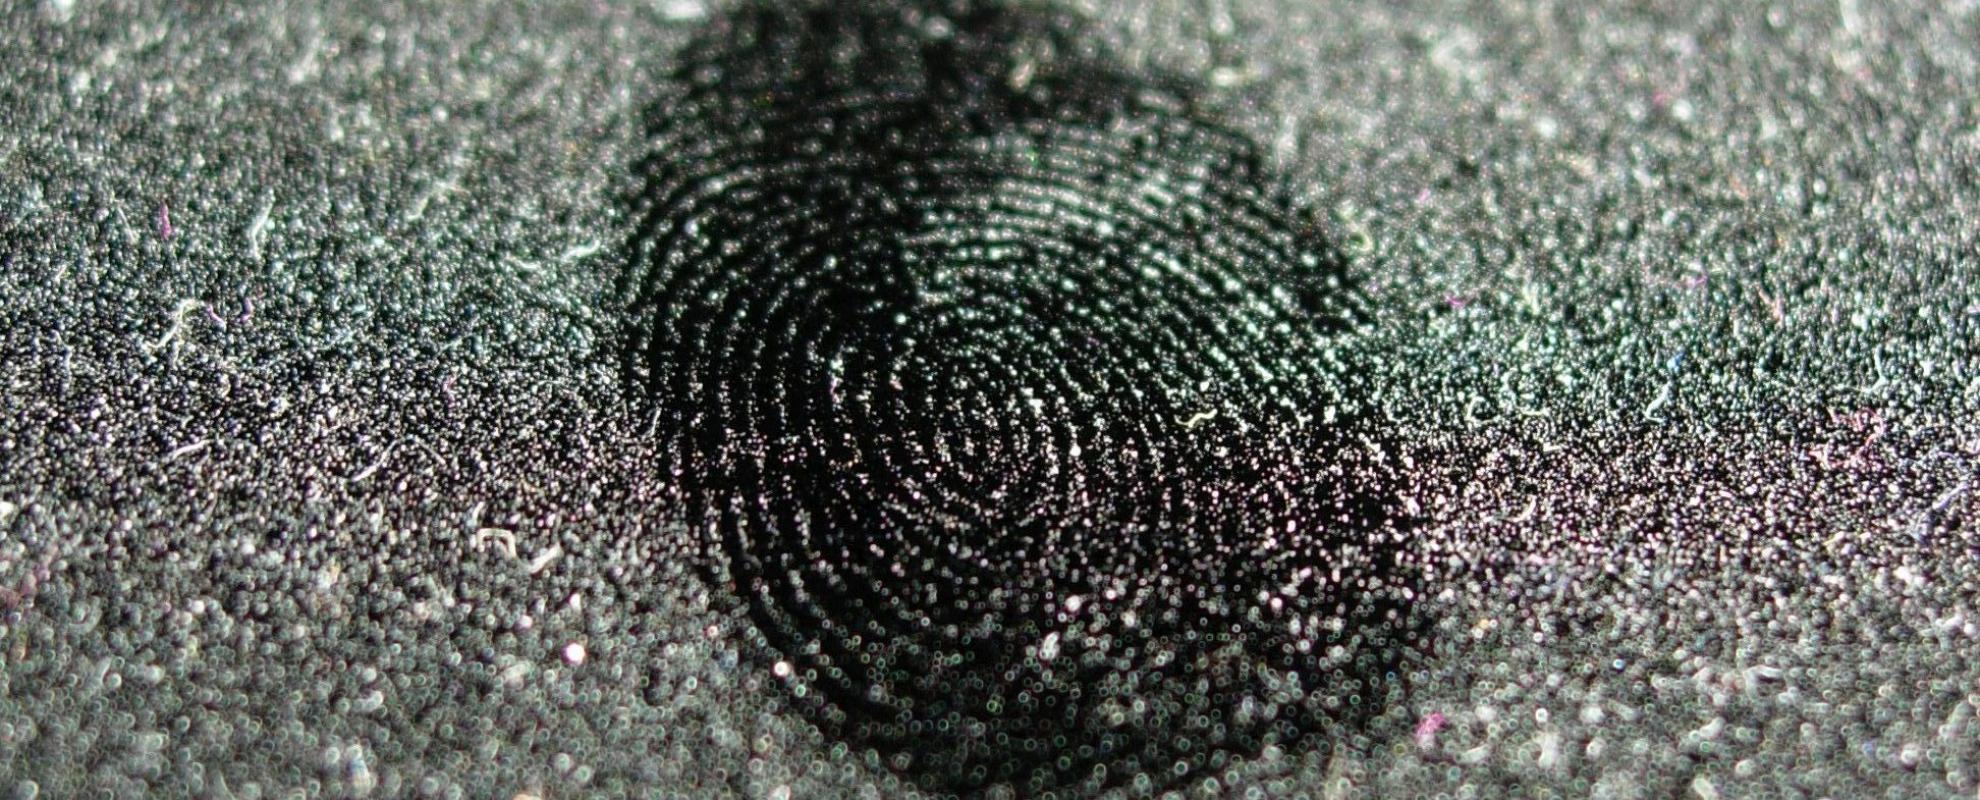 Fingerprint © Suvi Korhonen 